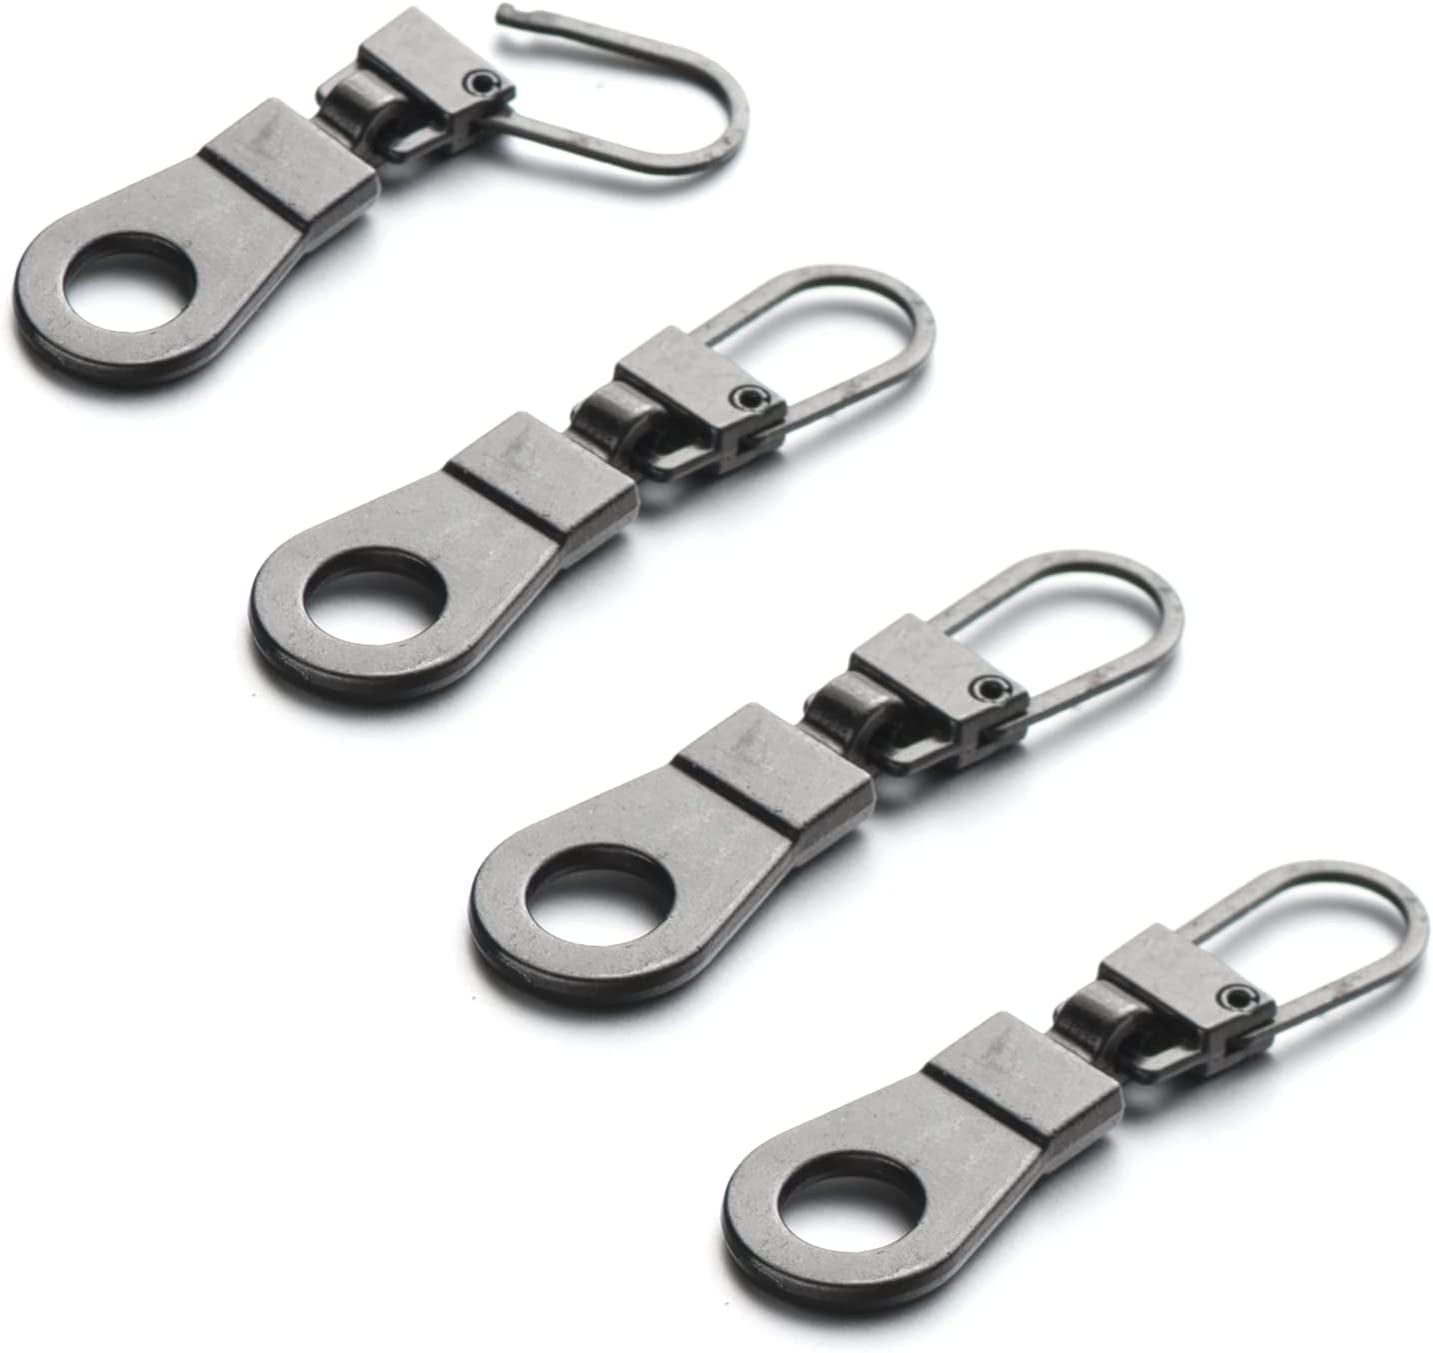 Universal Zipper Pull Tab Replacement Metal Handle Zipper Extender Handle Fixer Zipper Sliders for Backpack Jacket Handbag L4n4, Size: 37, Silver